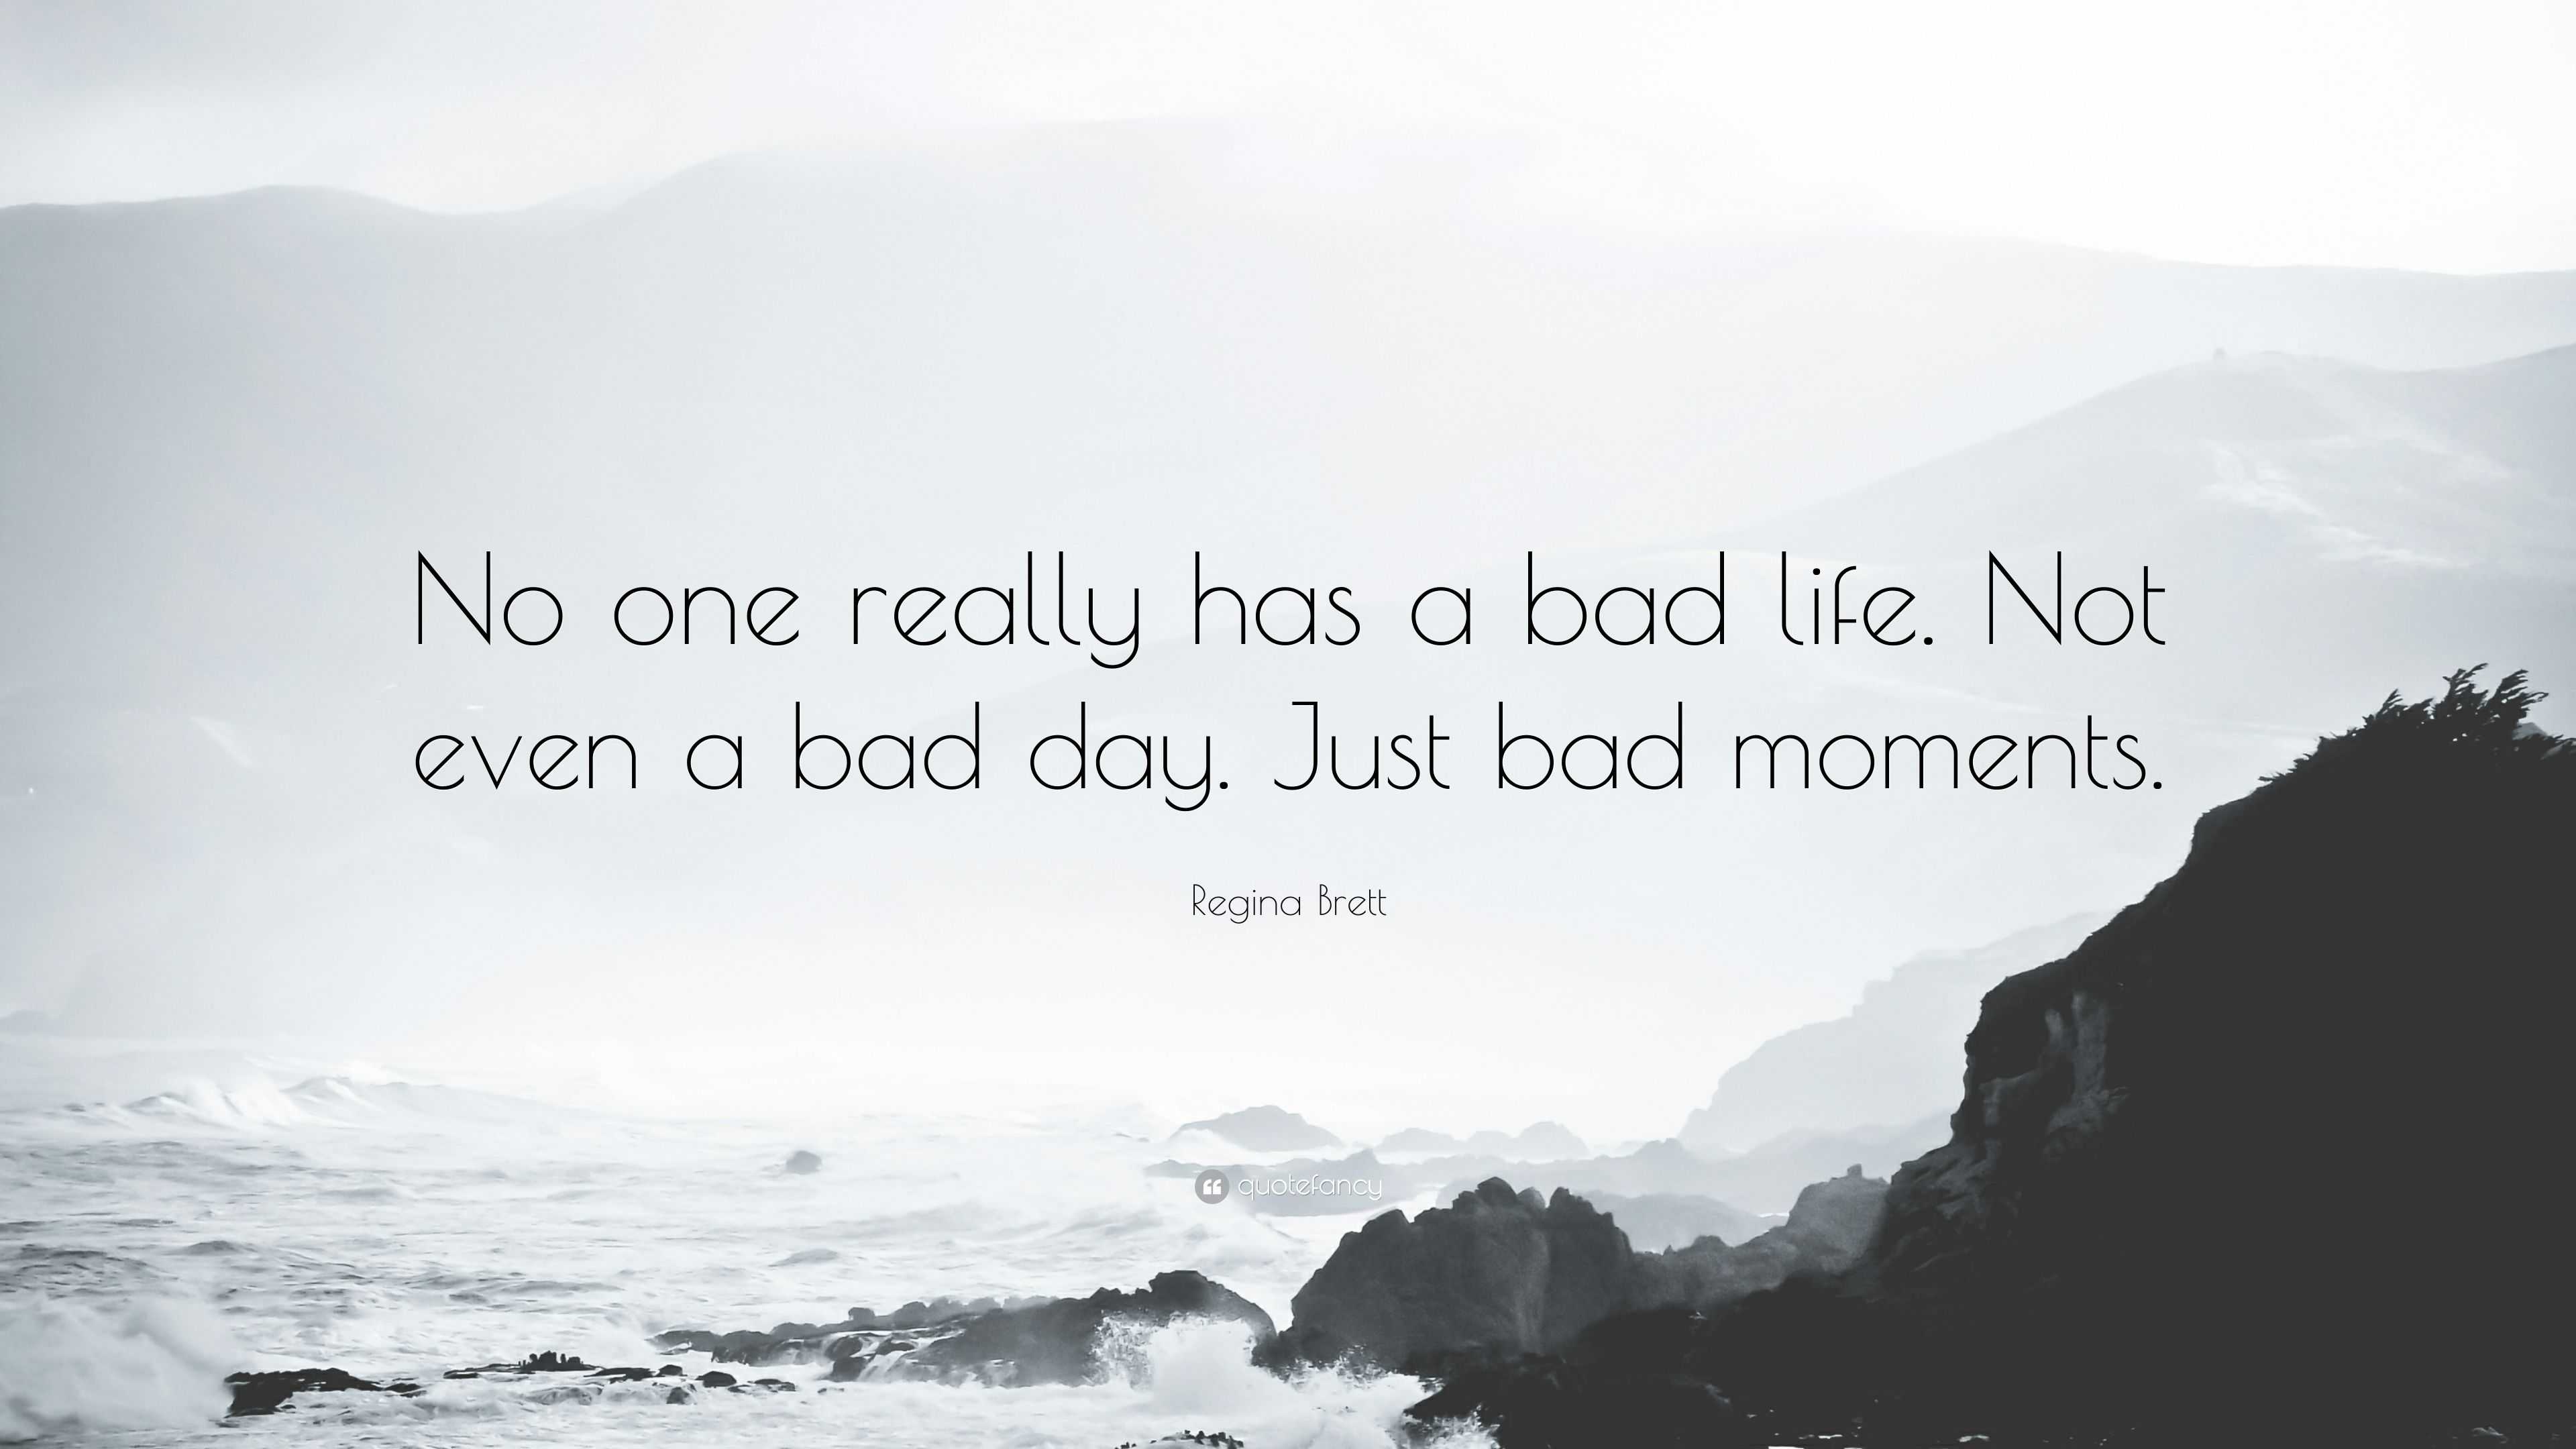 Regina Brett Quote “No one really has a bad life Not even a